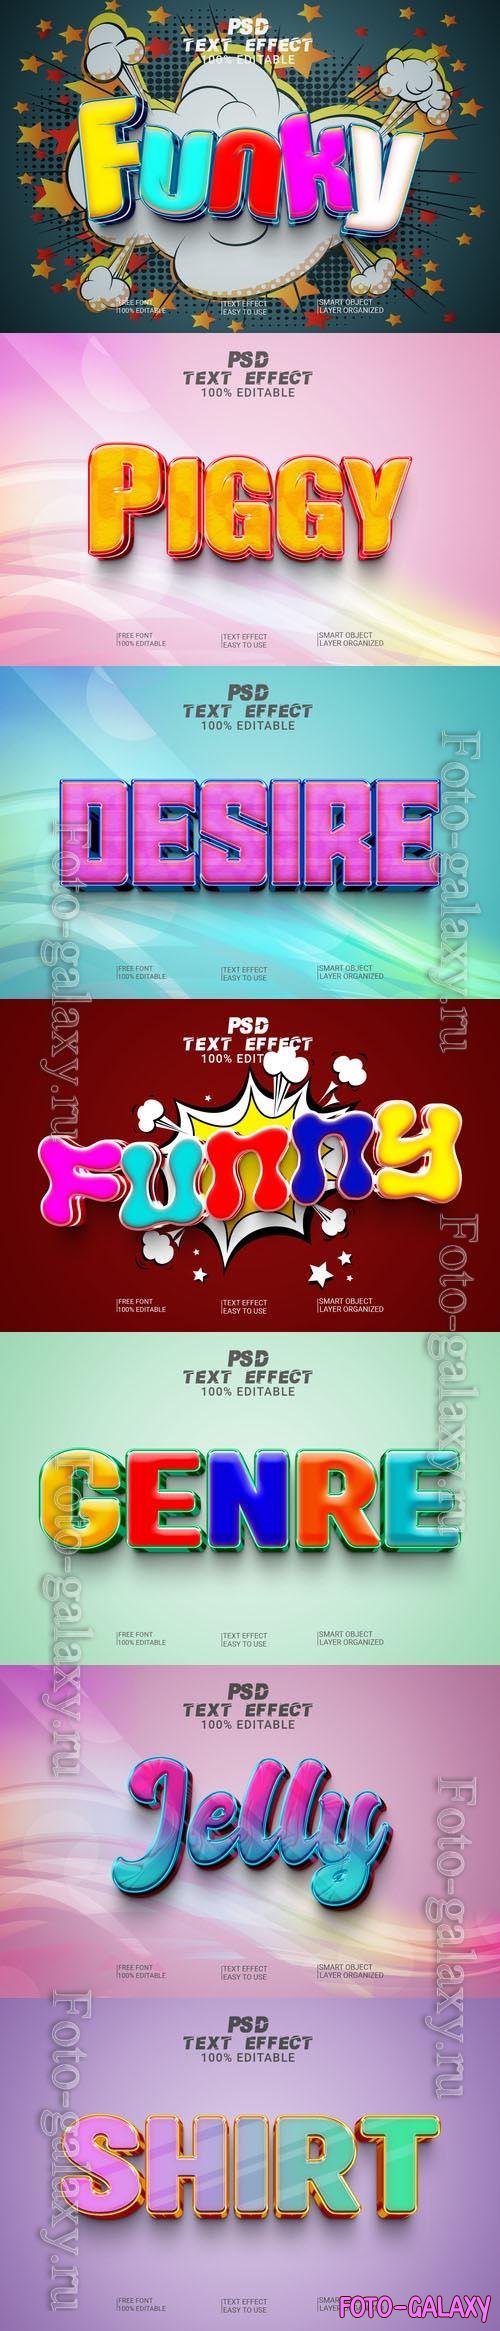 Psd style text effect editable set vol 437 